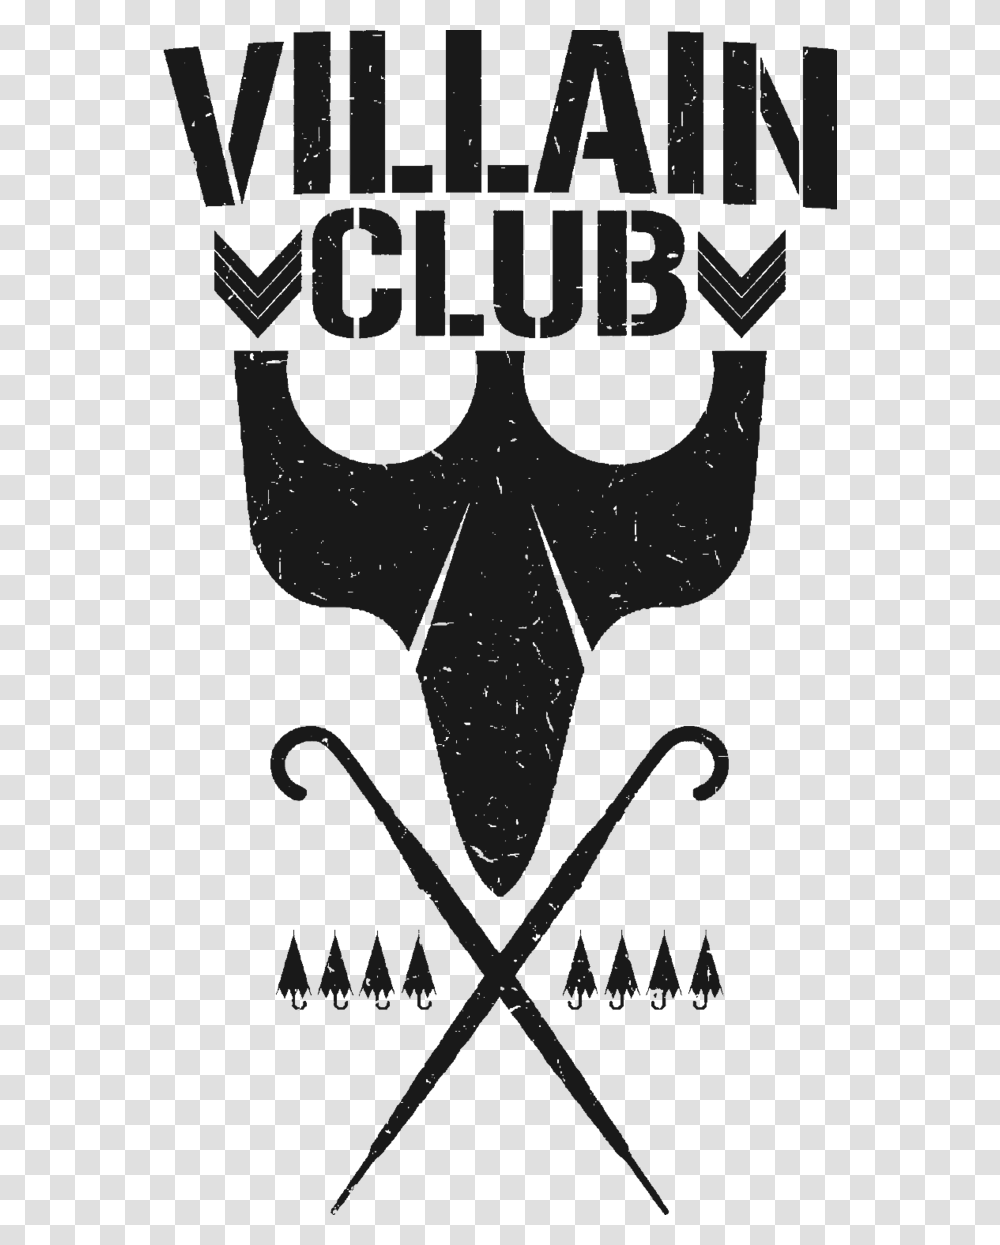 Adam Cole Villain Club Logo, Poster, Advertisement, Stencil Transparent Png